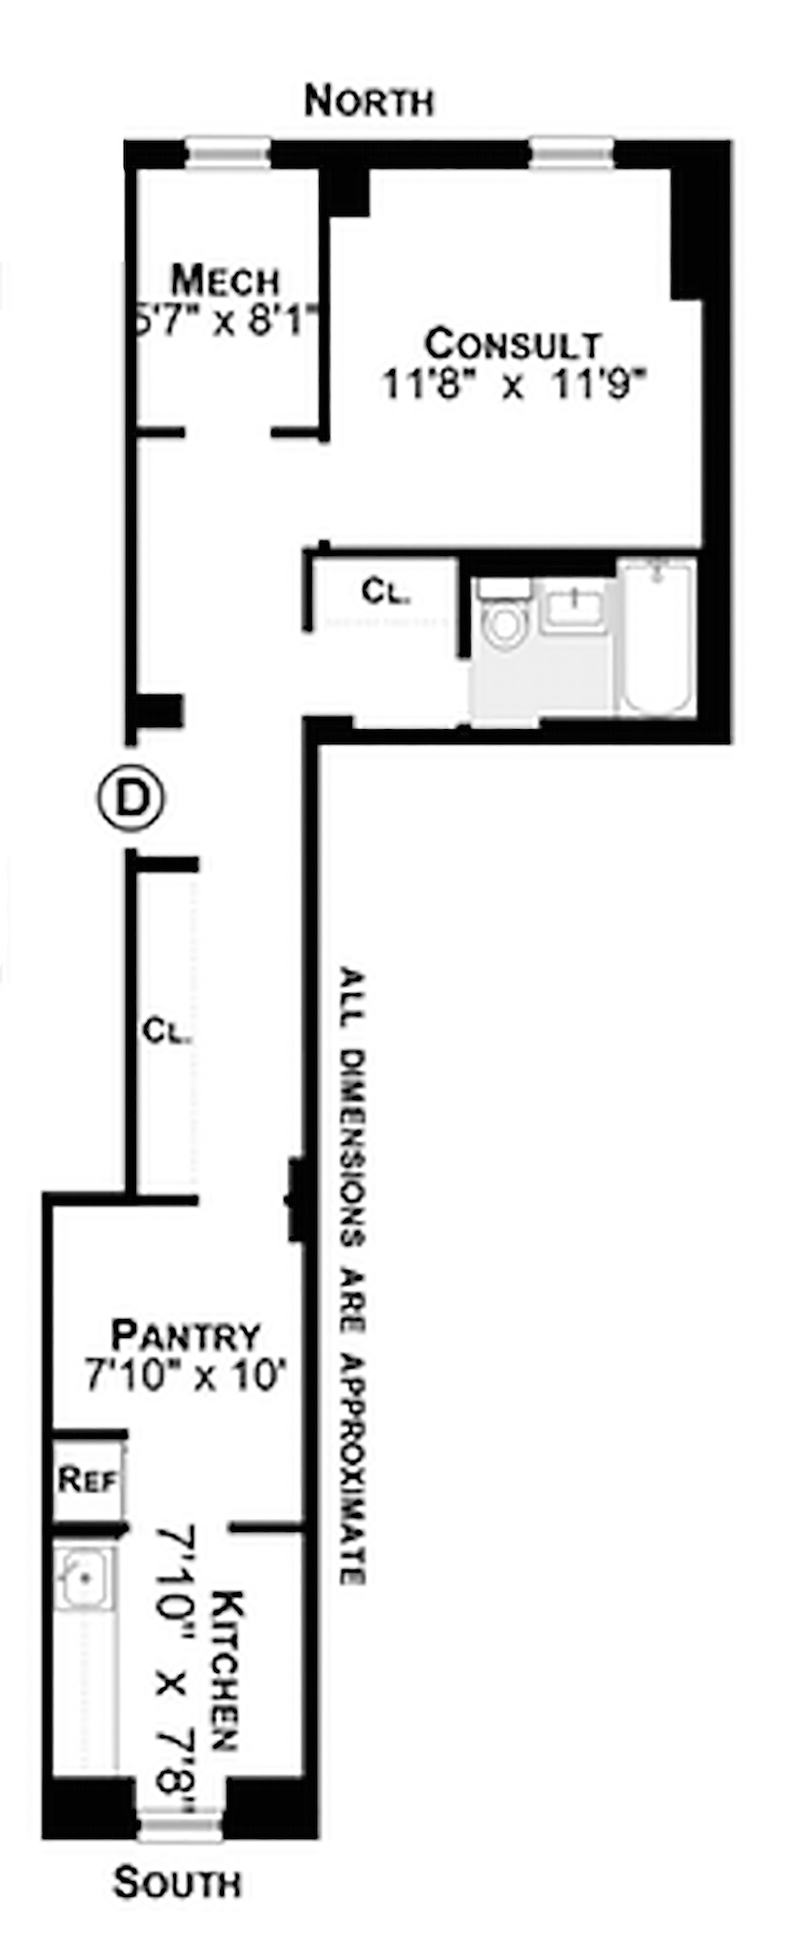 Floorplan for 333 East 34th Street, D